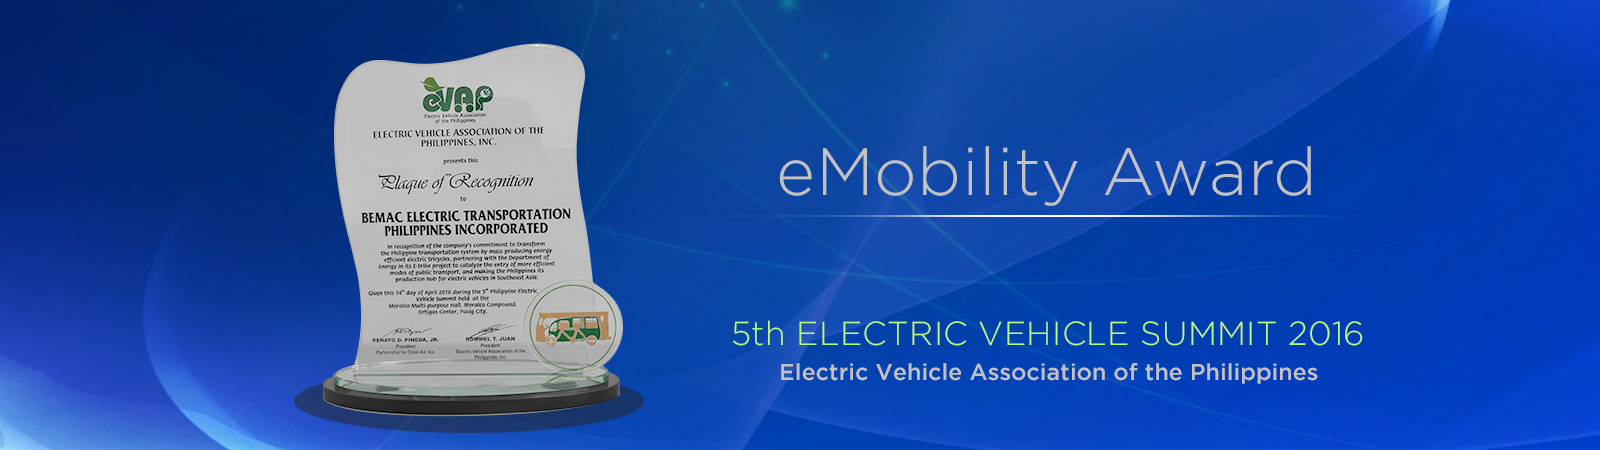 emobility-award